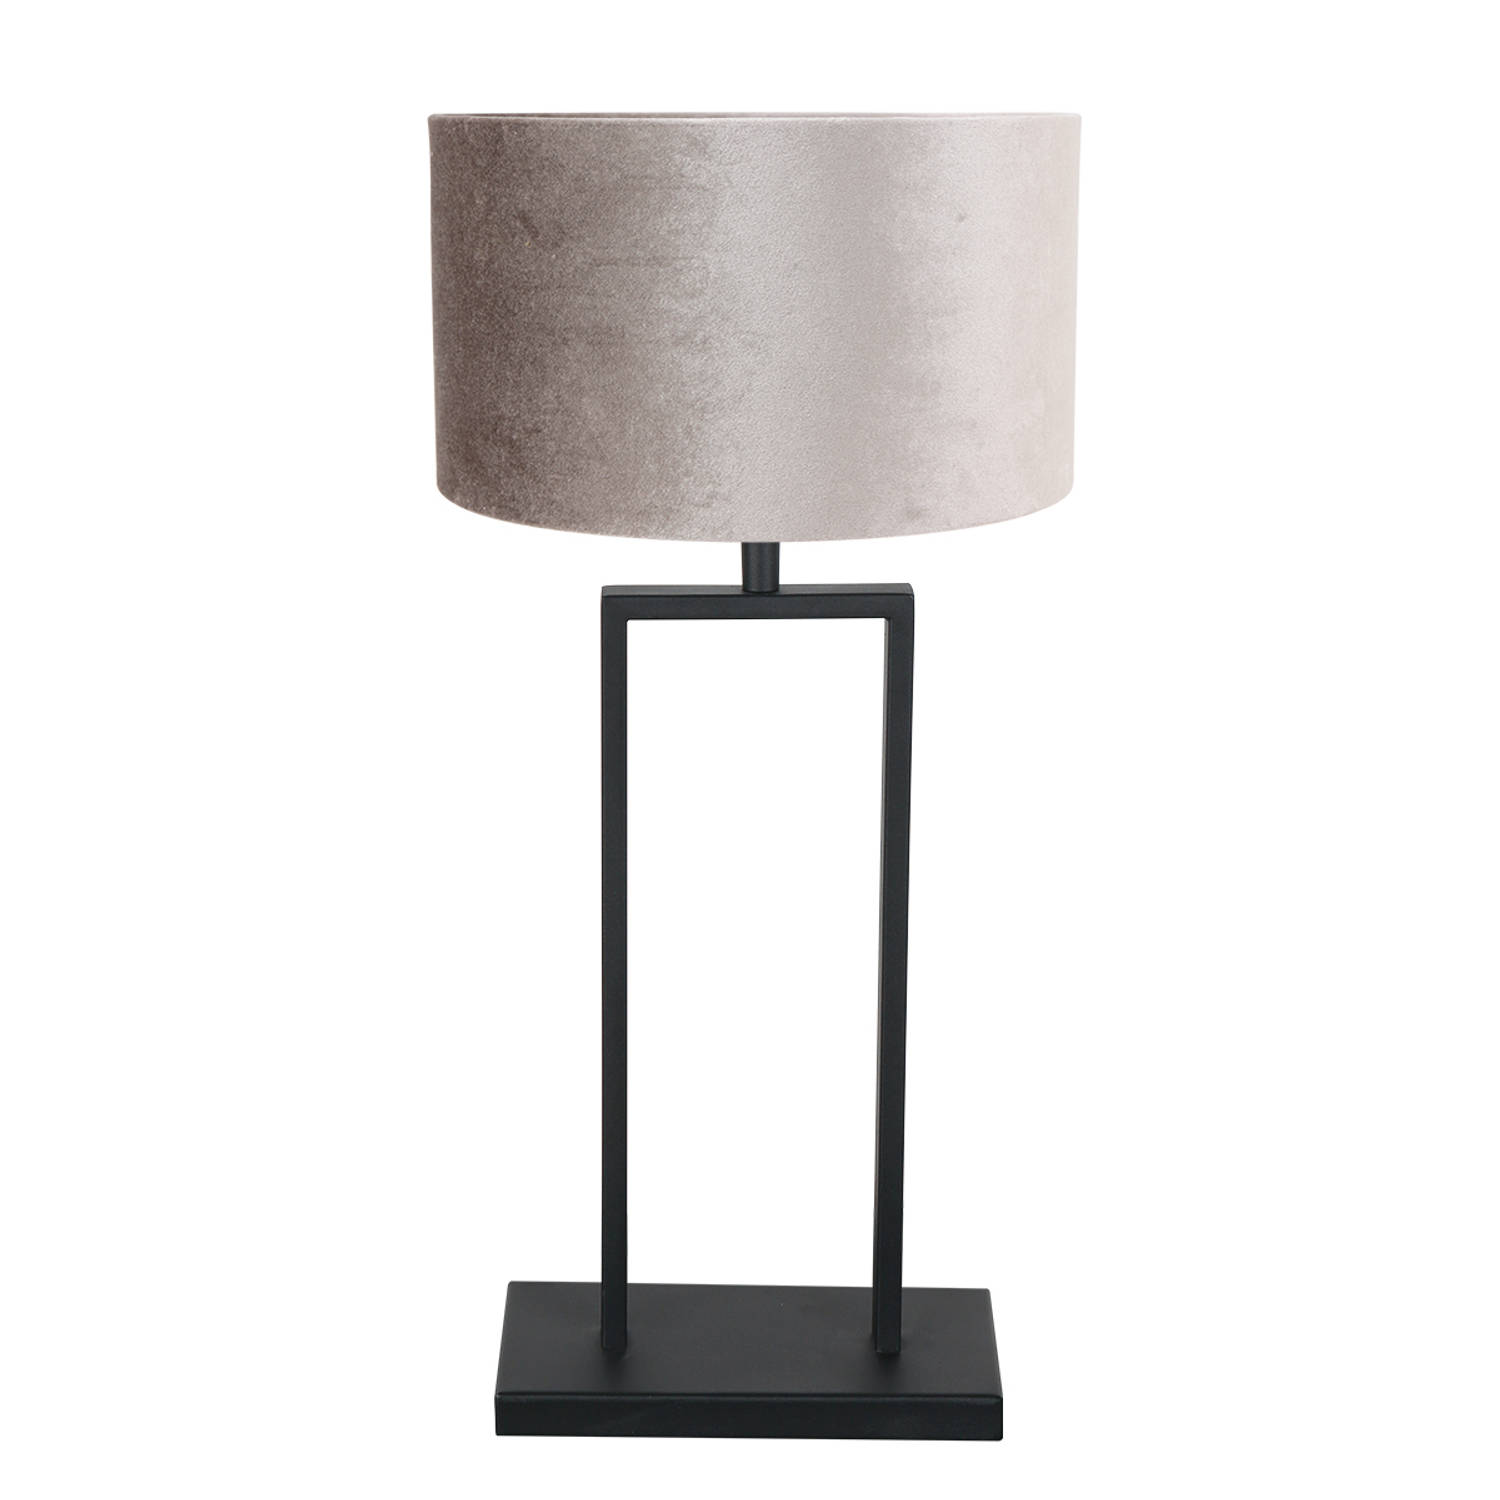 Tafellamp Stang | 1-lichts | E27 | zilver & zwart | slaapkamer / woonkamer | modern design | eettafel verlichting